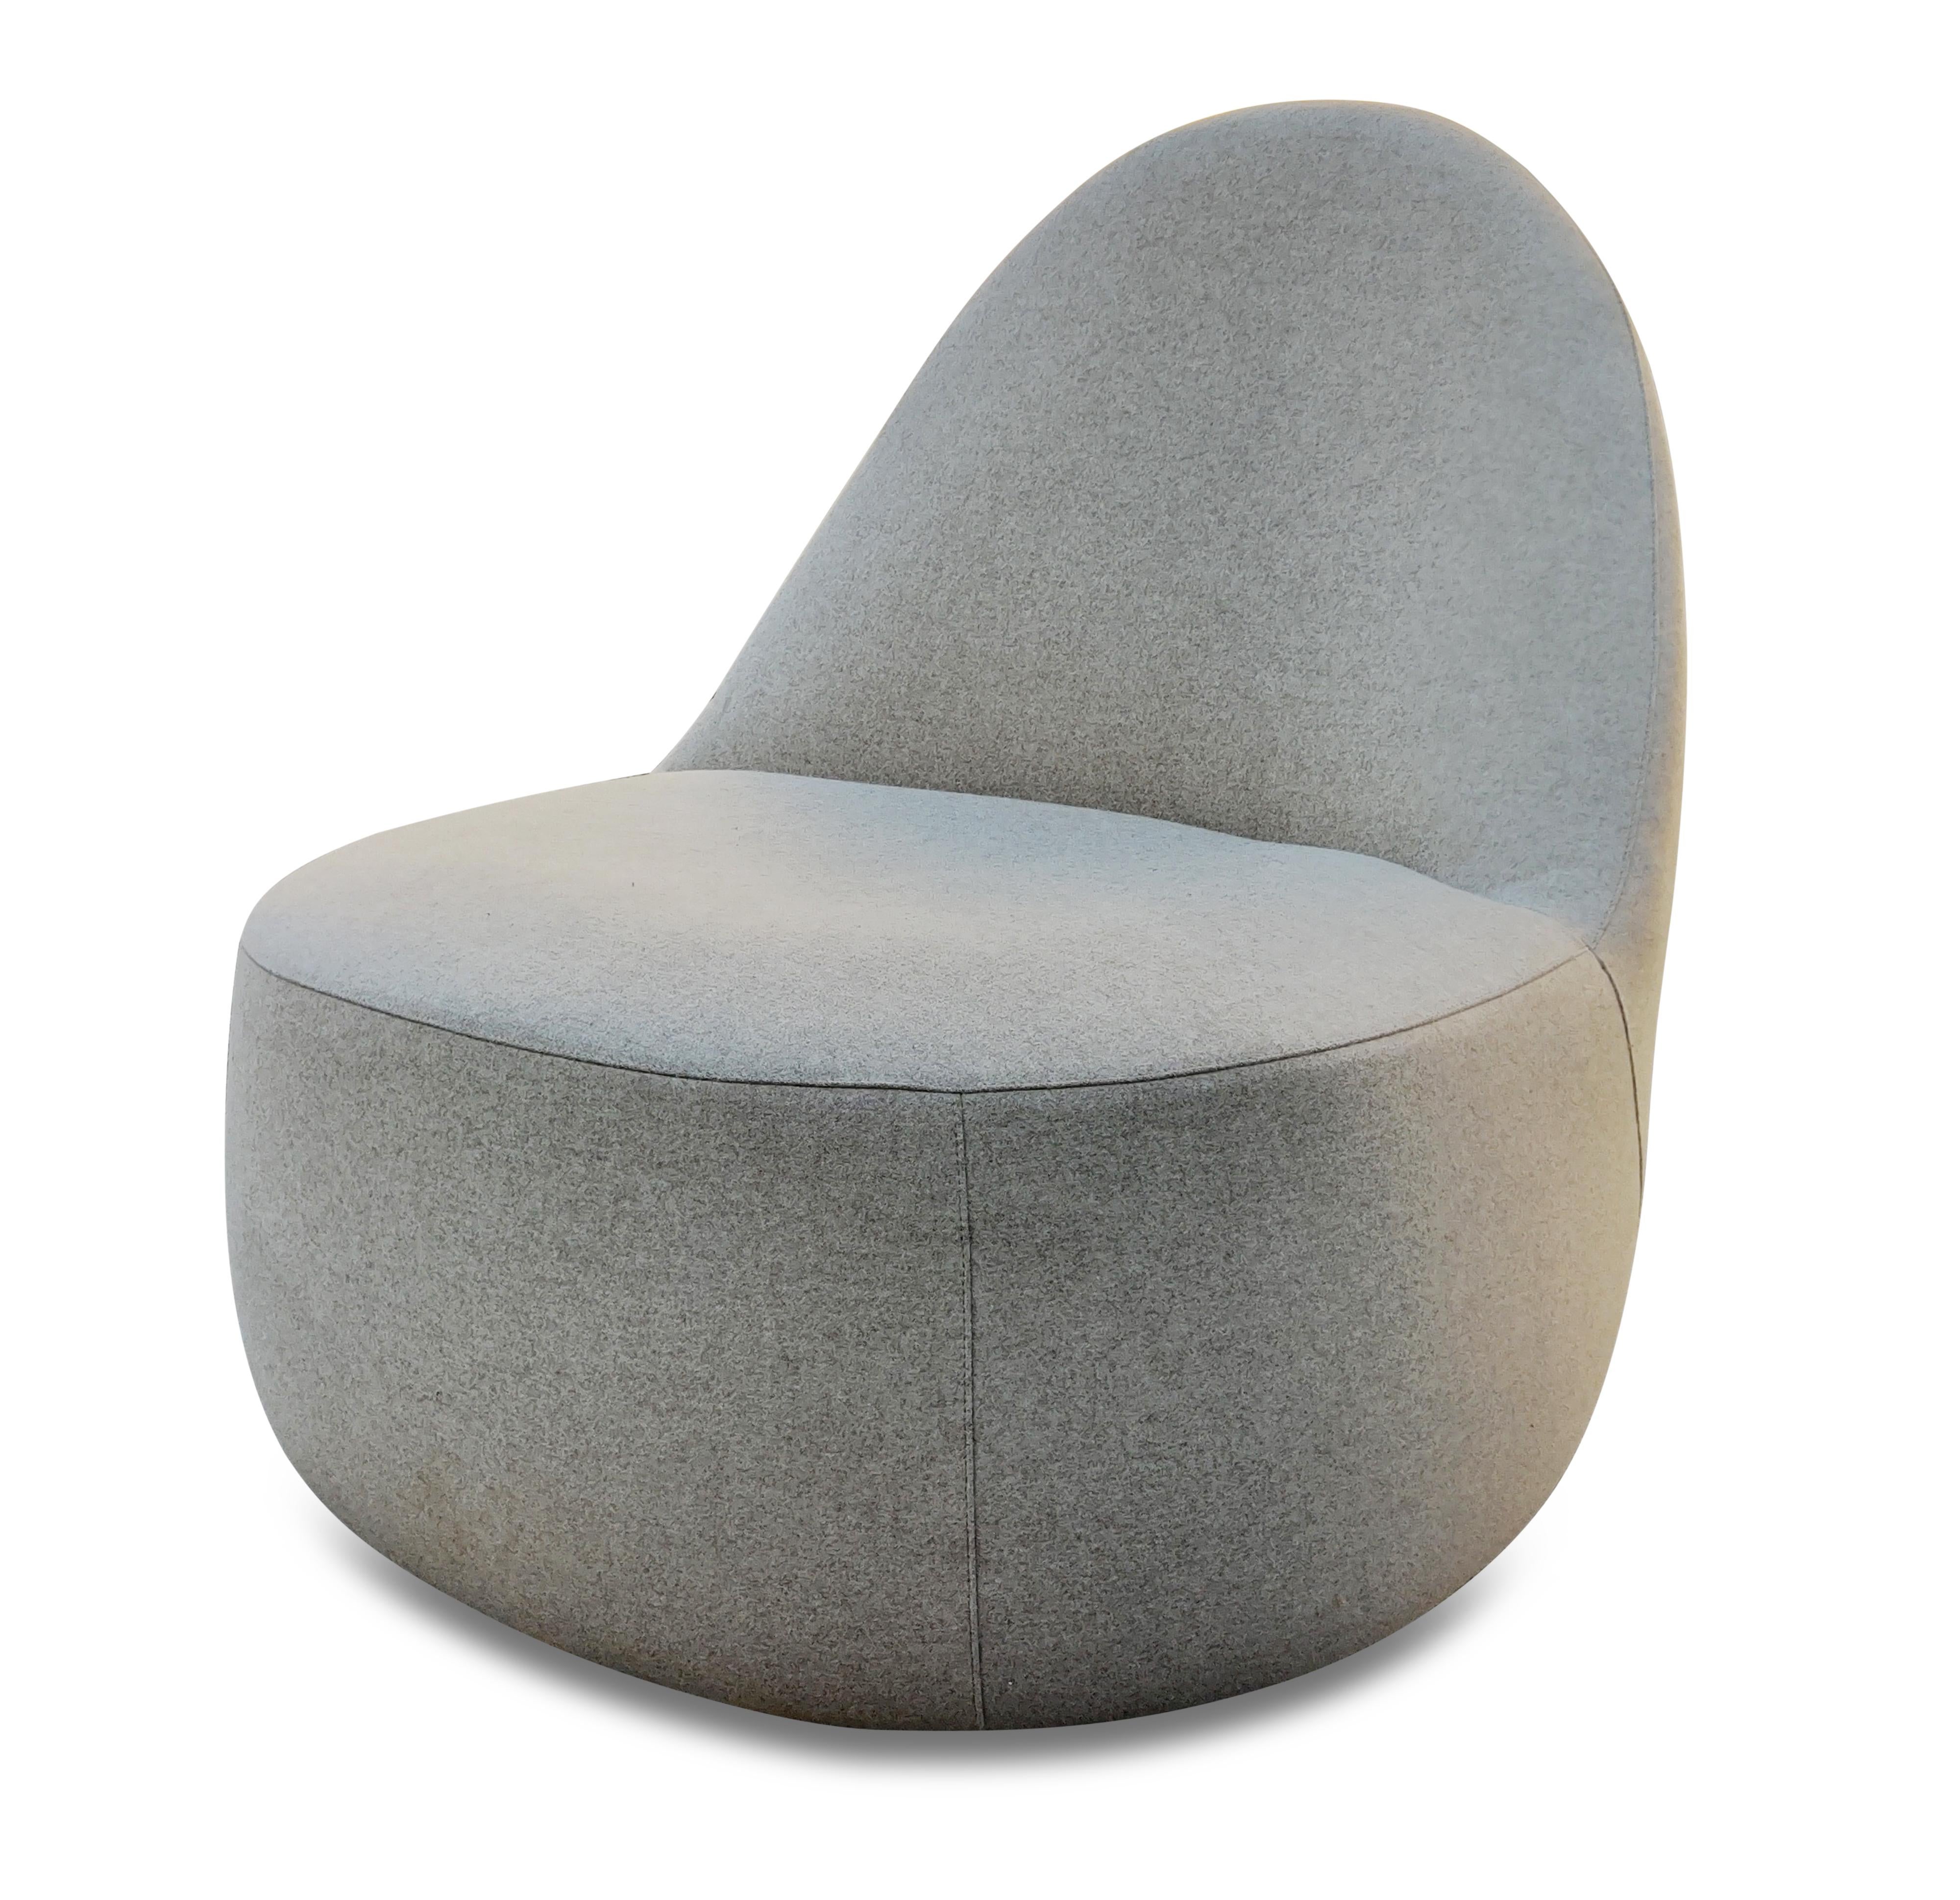 Mitt Lounge Chairs Pair, Claudia + Harry Washington, Bernhardt Design Space-Age 4